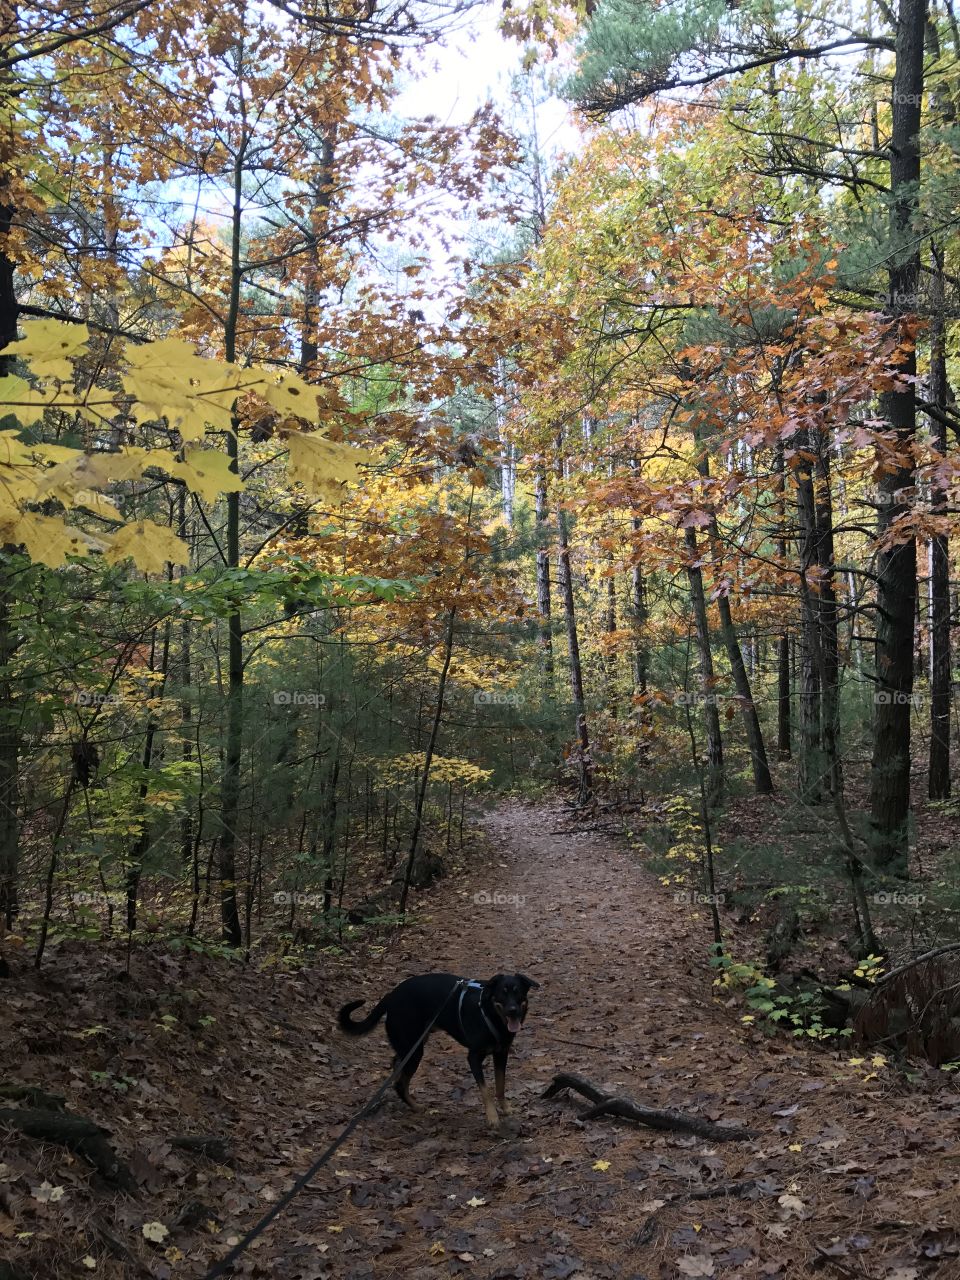 Saugatuck Michigan walks with my dog in the fall!